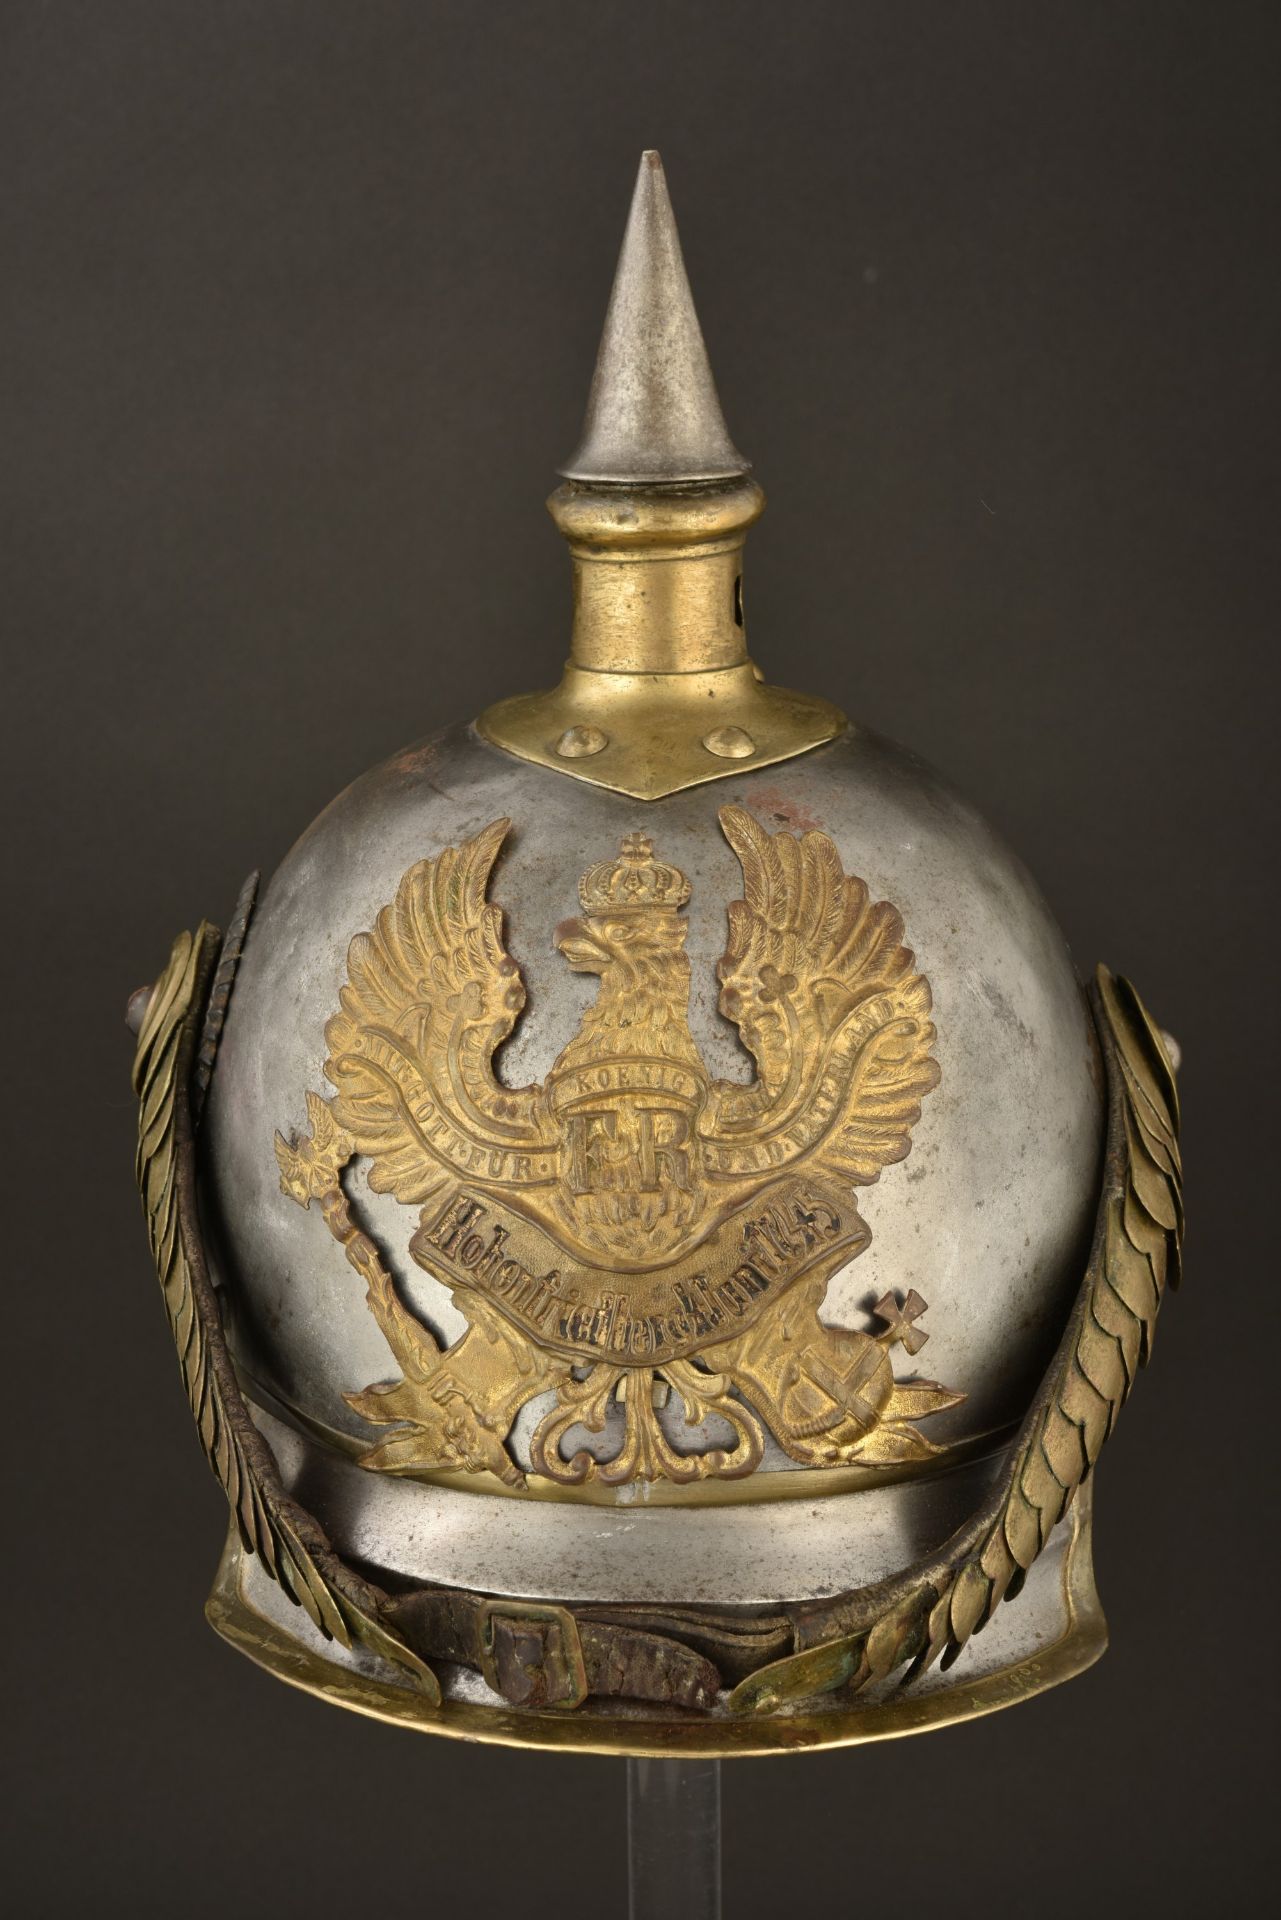 Casque modele 1853 modifie 1862-1867 du 2eme Regiment de Cuirassiers de la Reine. Prussian 2nd cuira